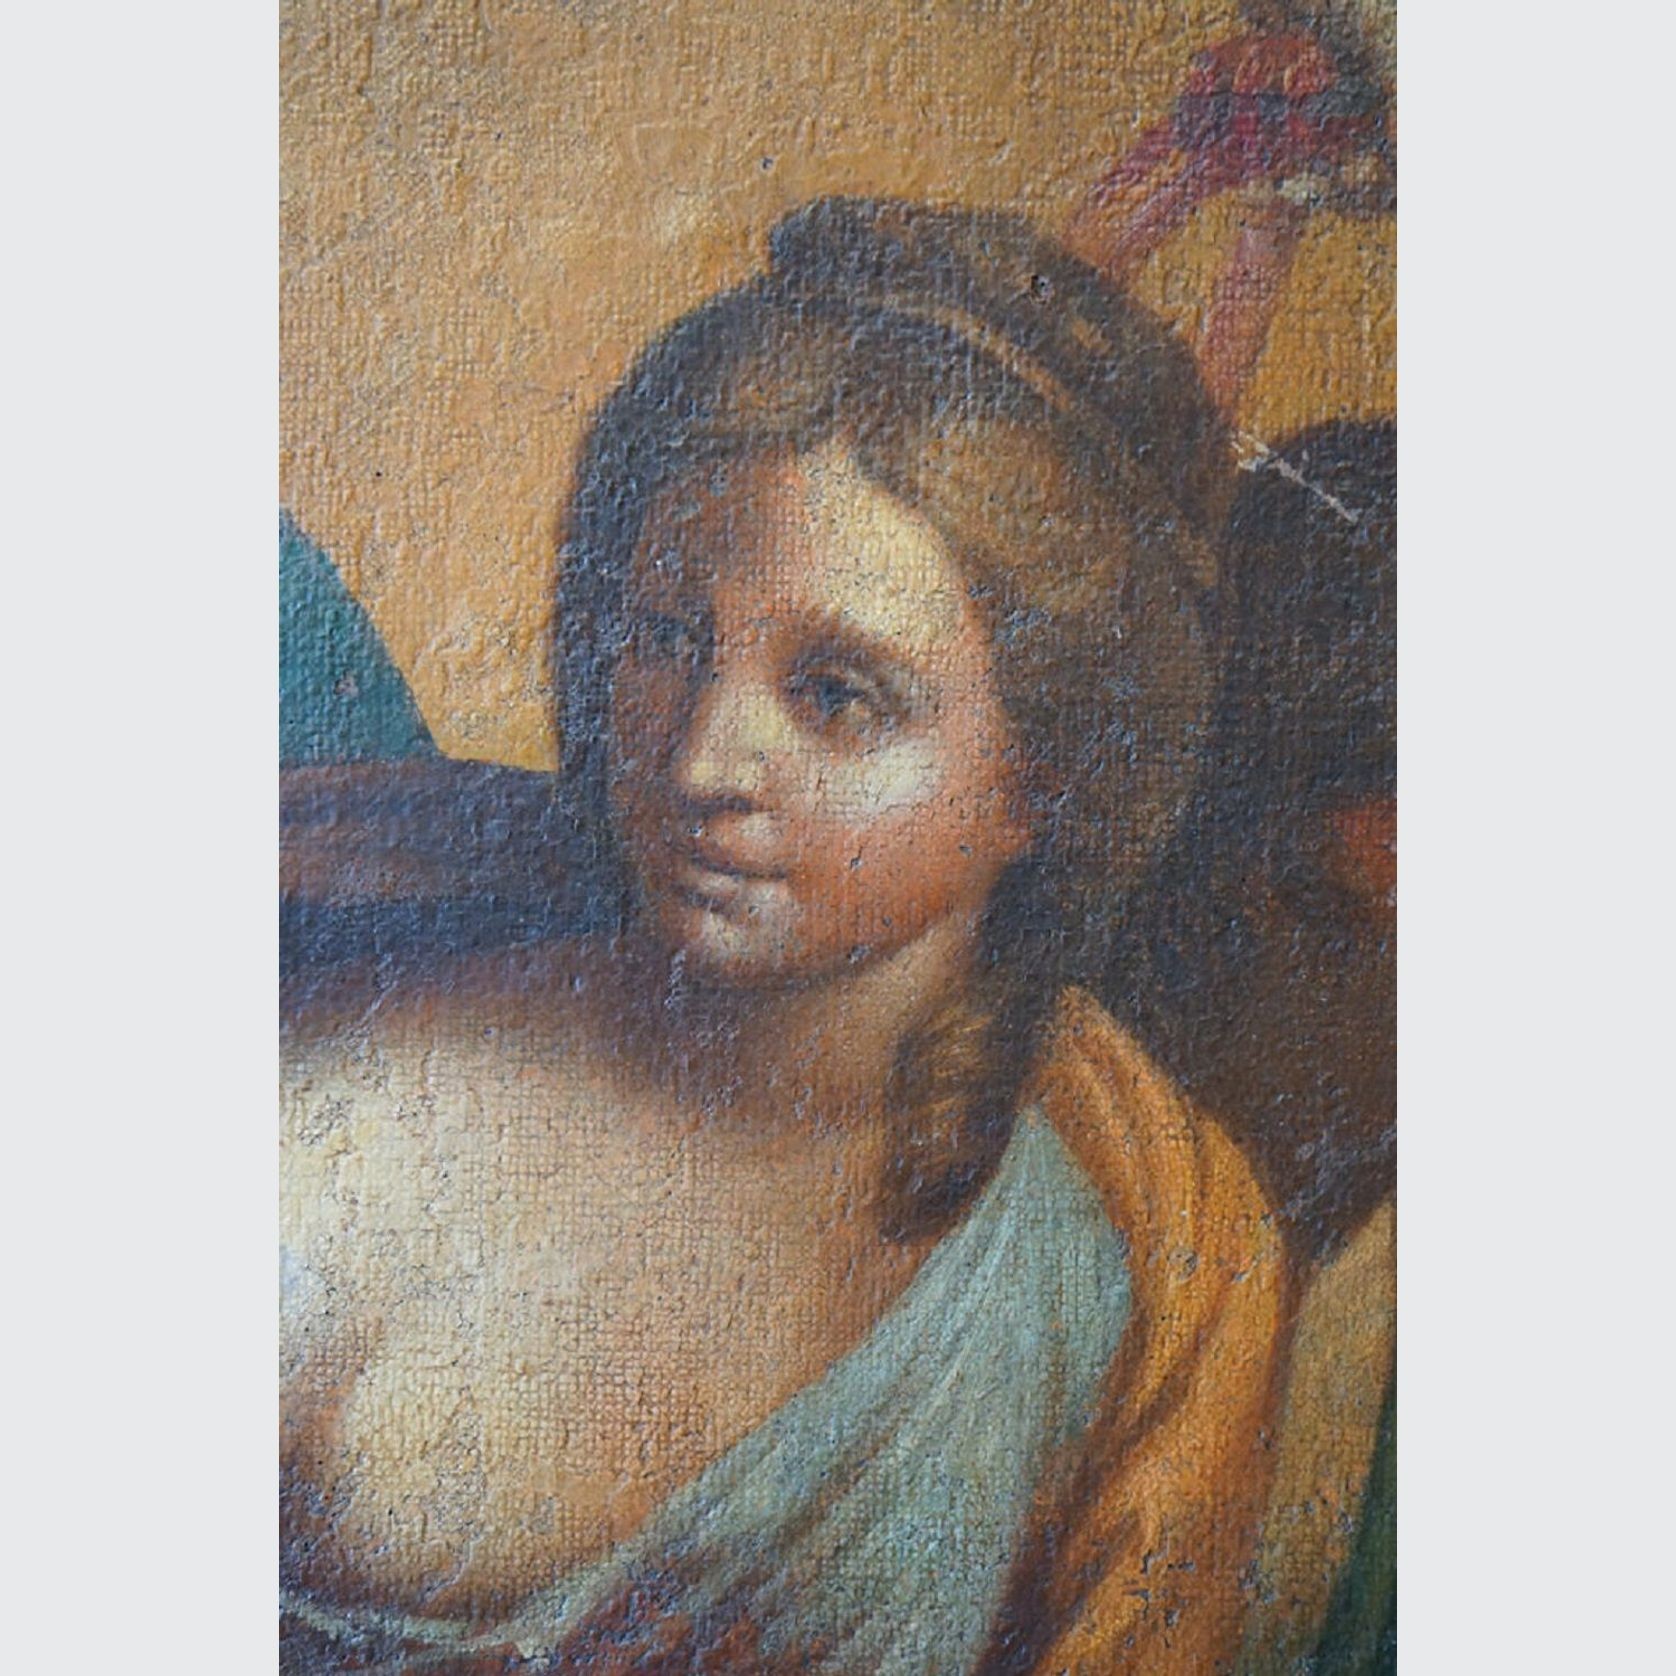 Large Italian Antique Oil Painting of Aurora & Apollo gallery detail image